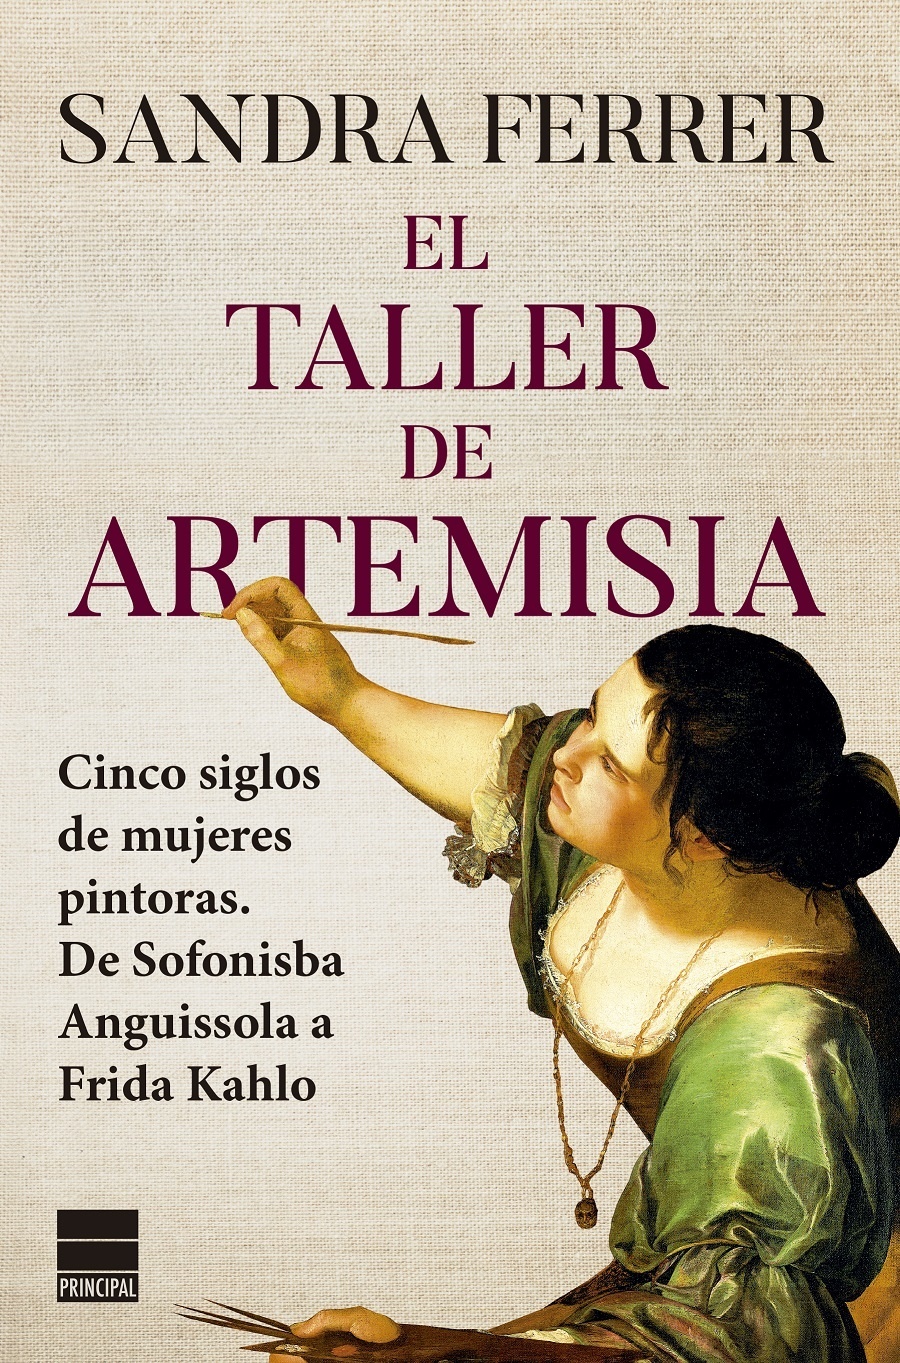 Taller de Artemisia, El "Cinco siglos de mujeres pintoras. De Sofonisba Anguissola a Frida Kahlo". 